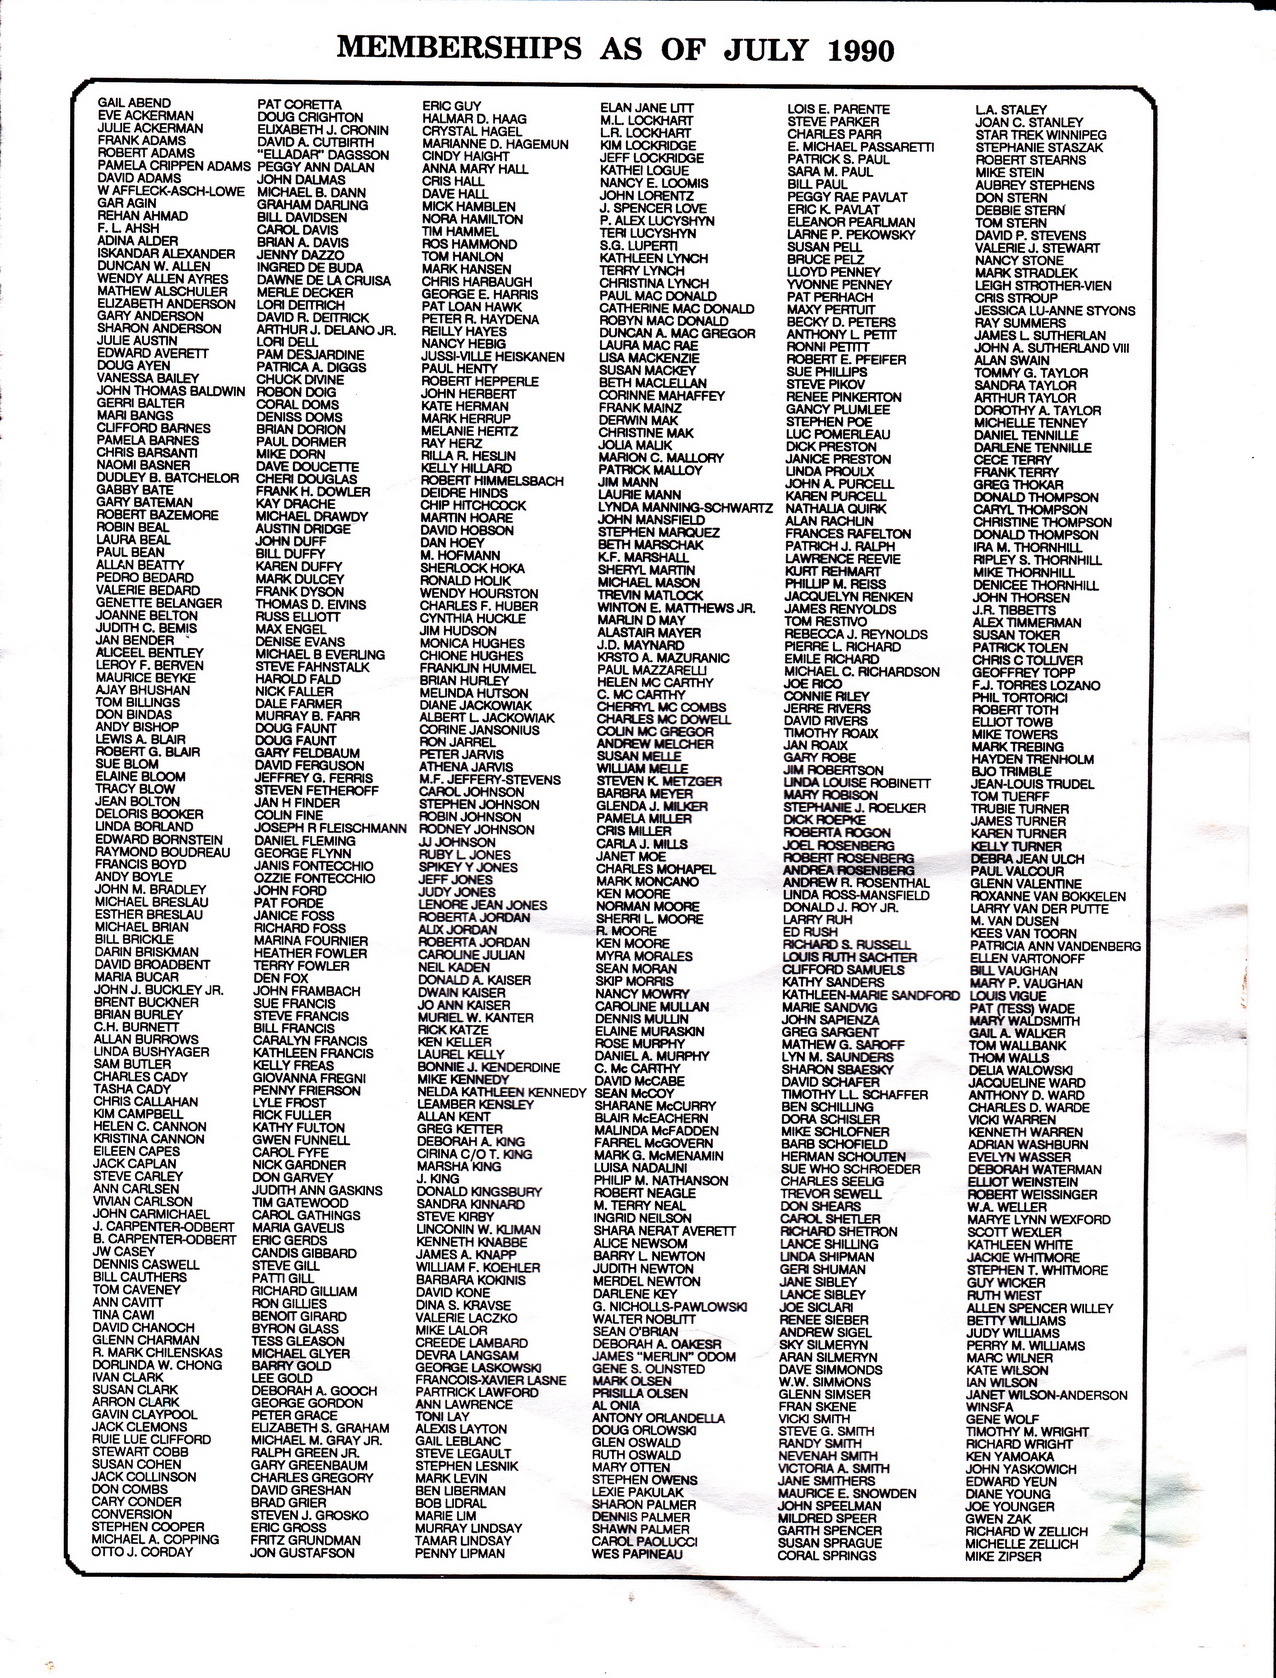 July 1990 Worldcon registration list